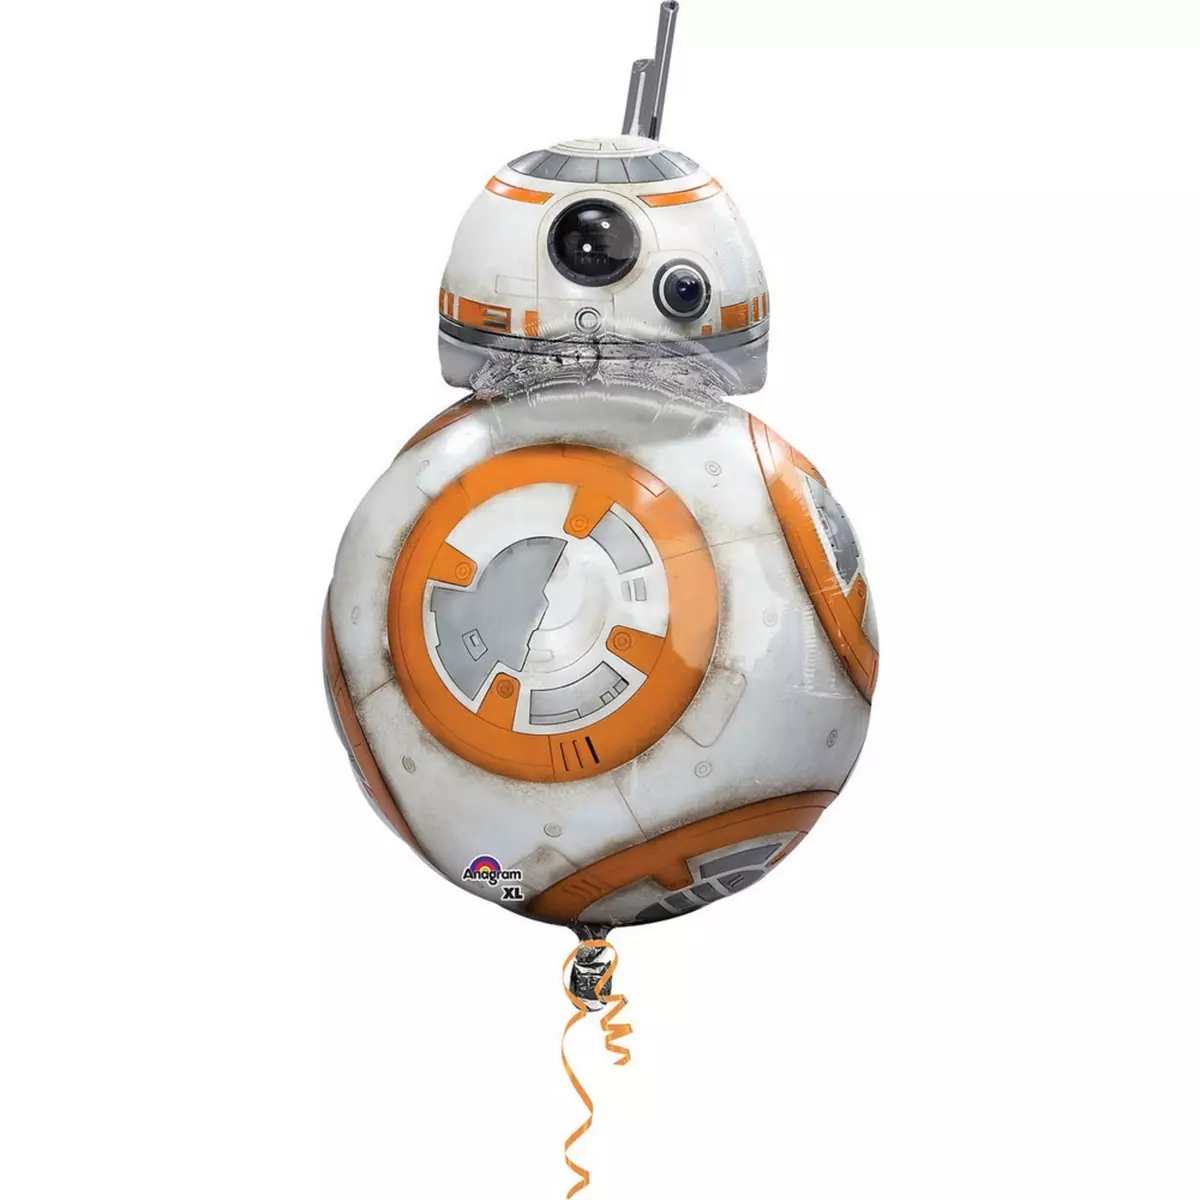  Grand ballon Star Wars BB8 hélium neuf